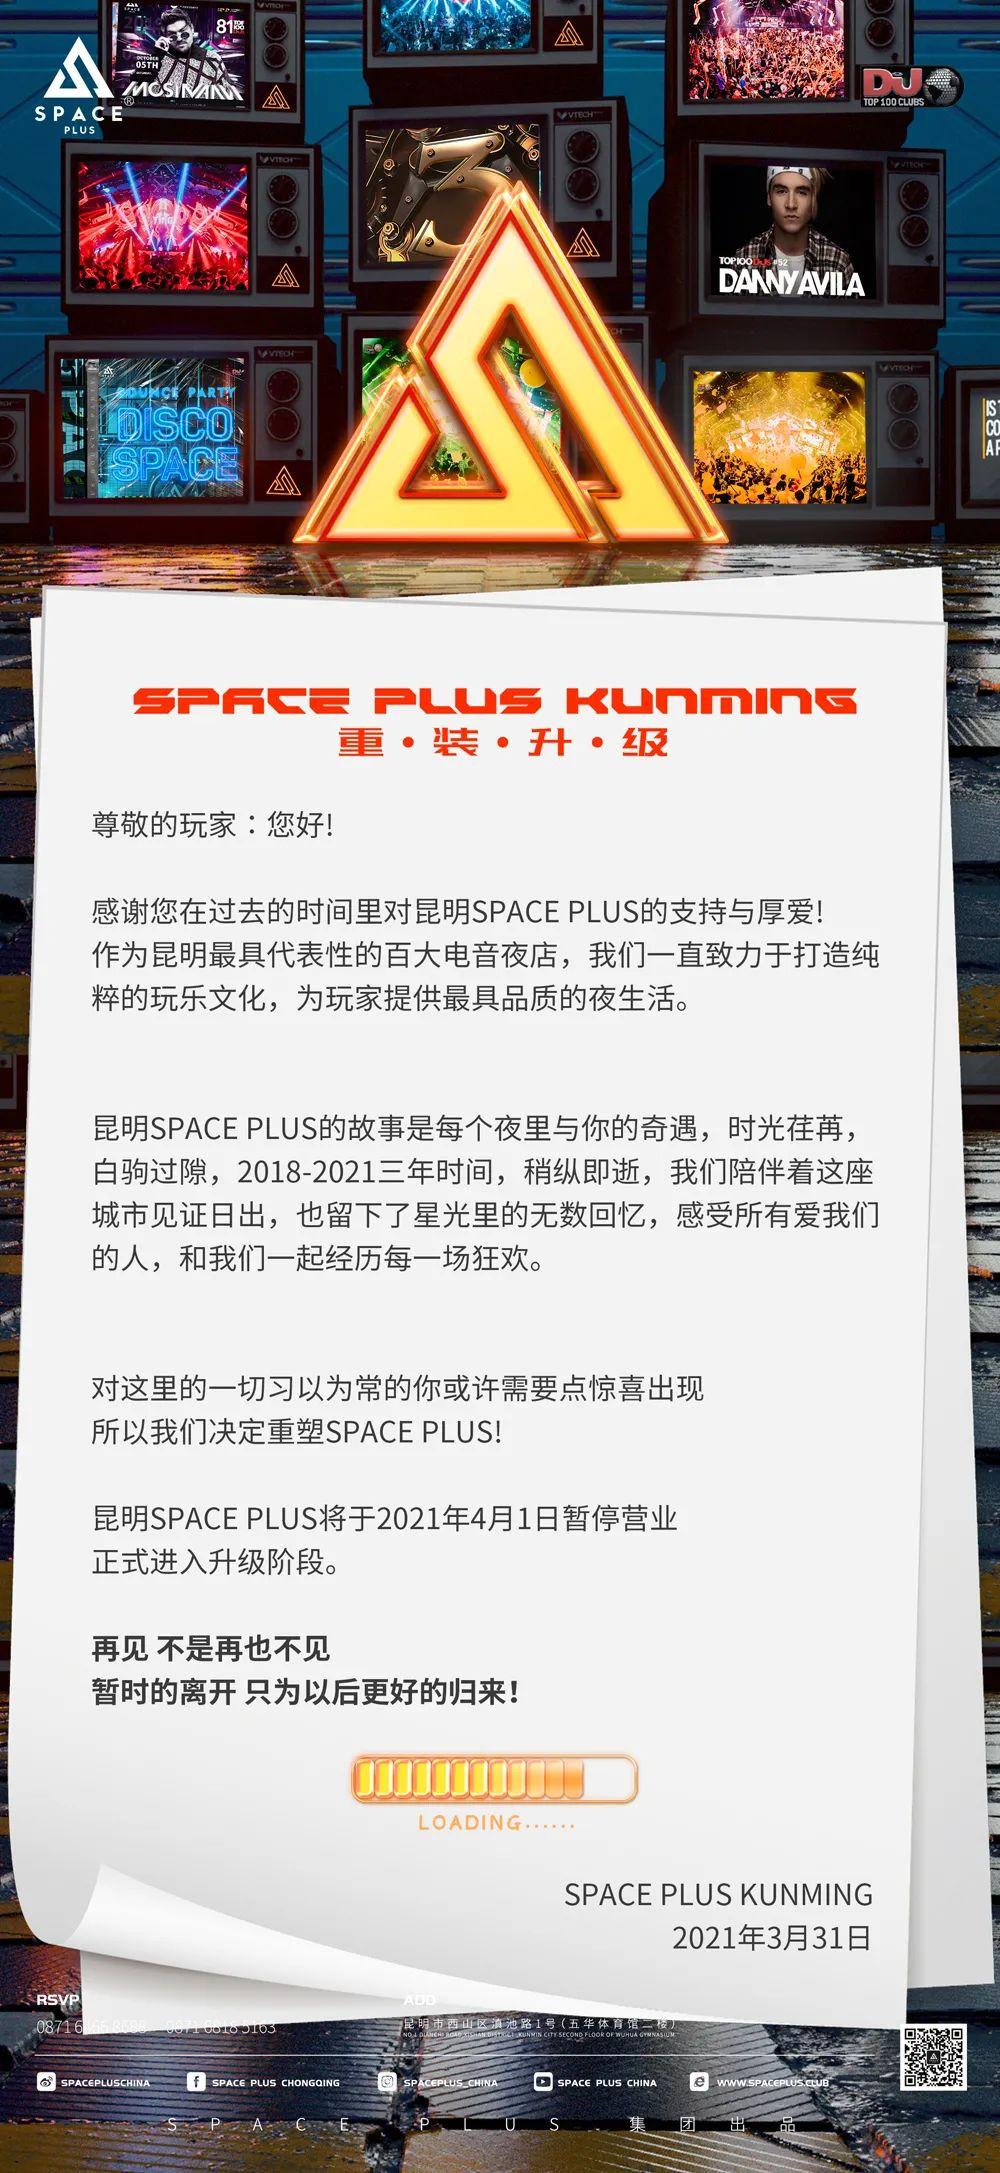 SPACE PLUS | 重装升级 暂时的离开 只为以后更好的归来-昆明天籁时代夜店